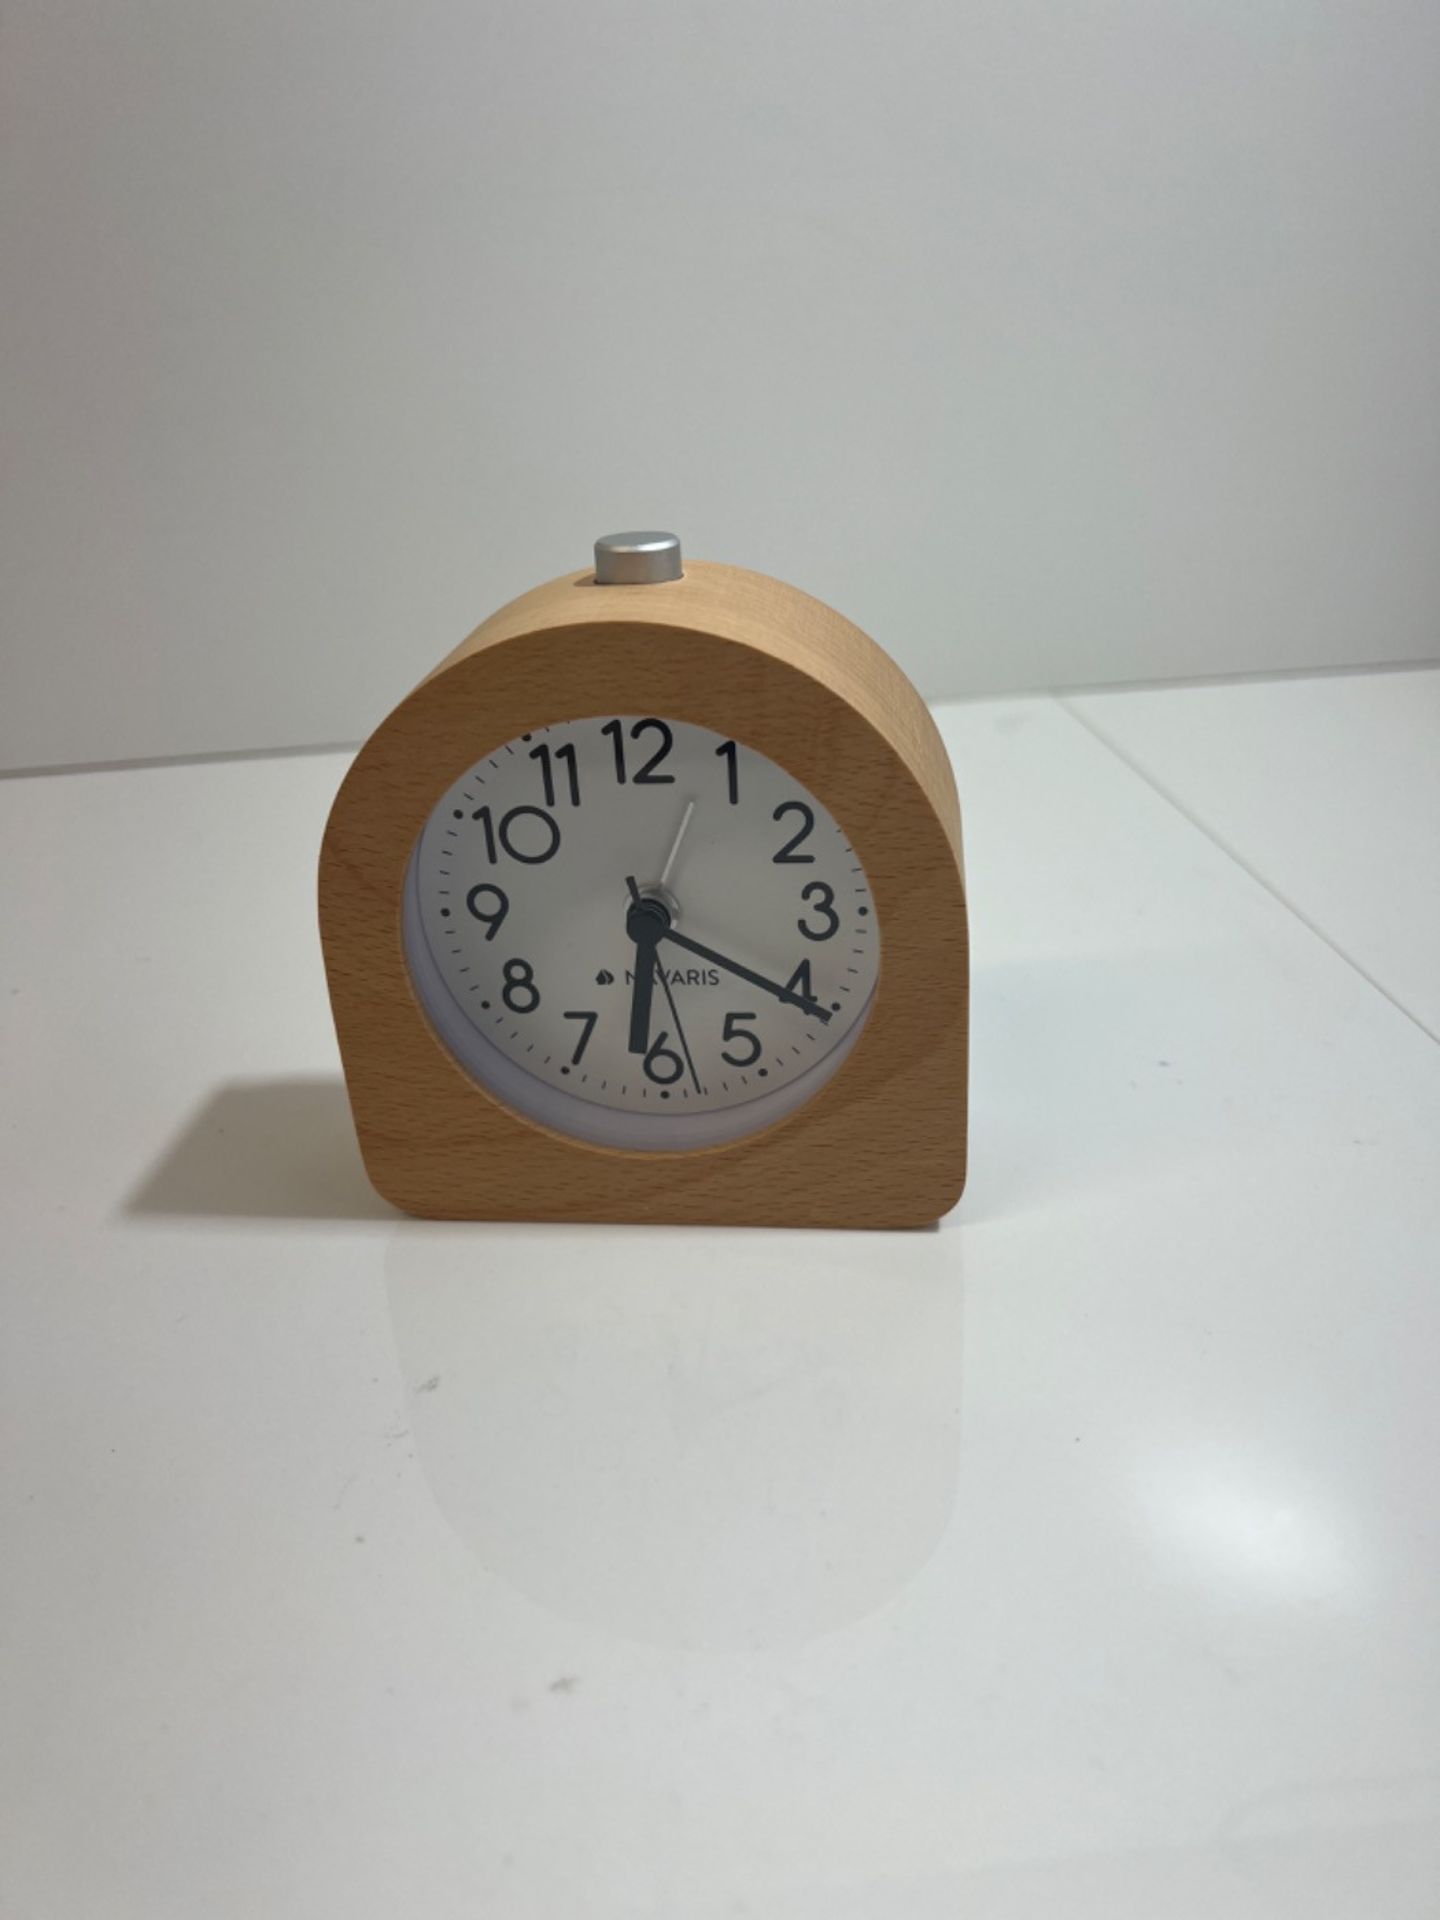 Navaris Wooden Bedside Alarm Clock - Analogue Table Clock w/Retro Design Snooze Function & Light -  - Image 2 of 2